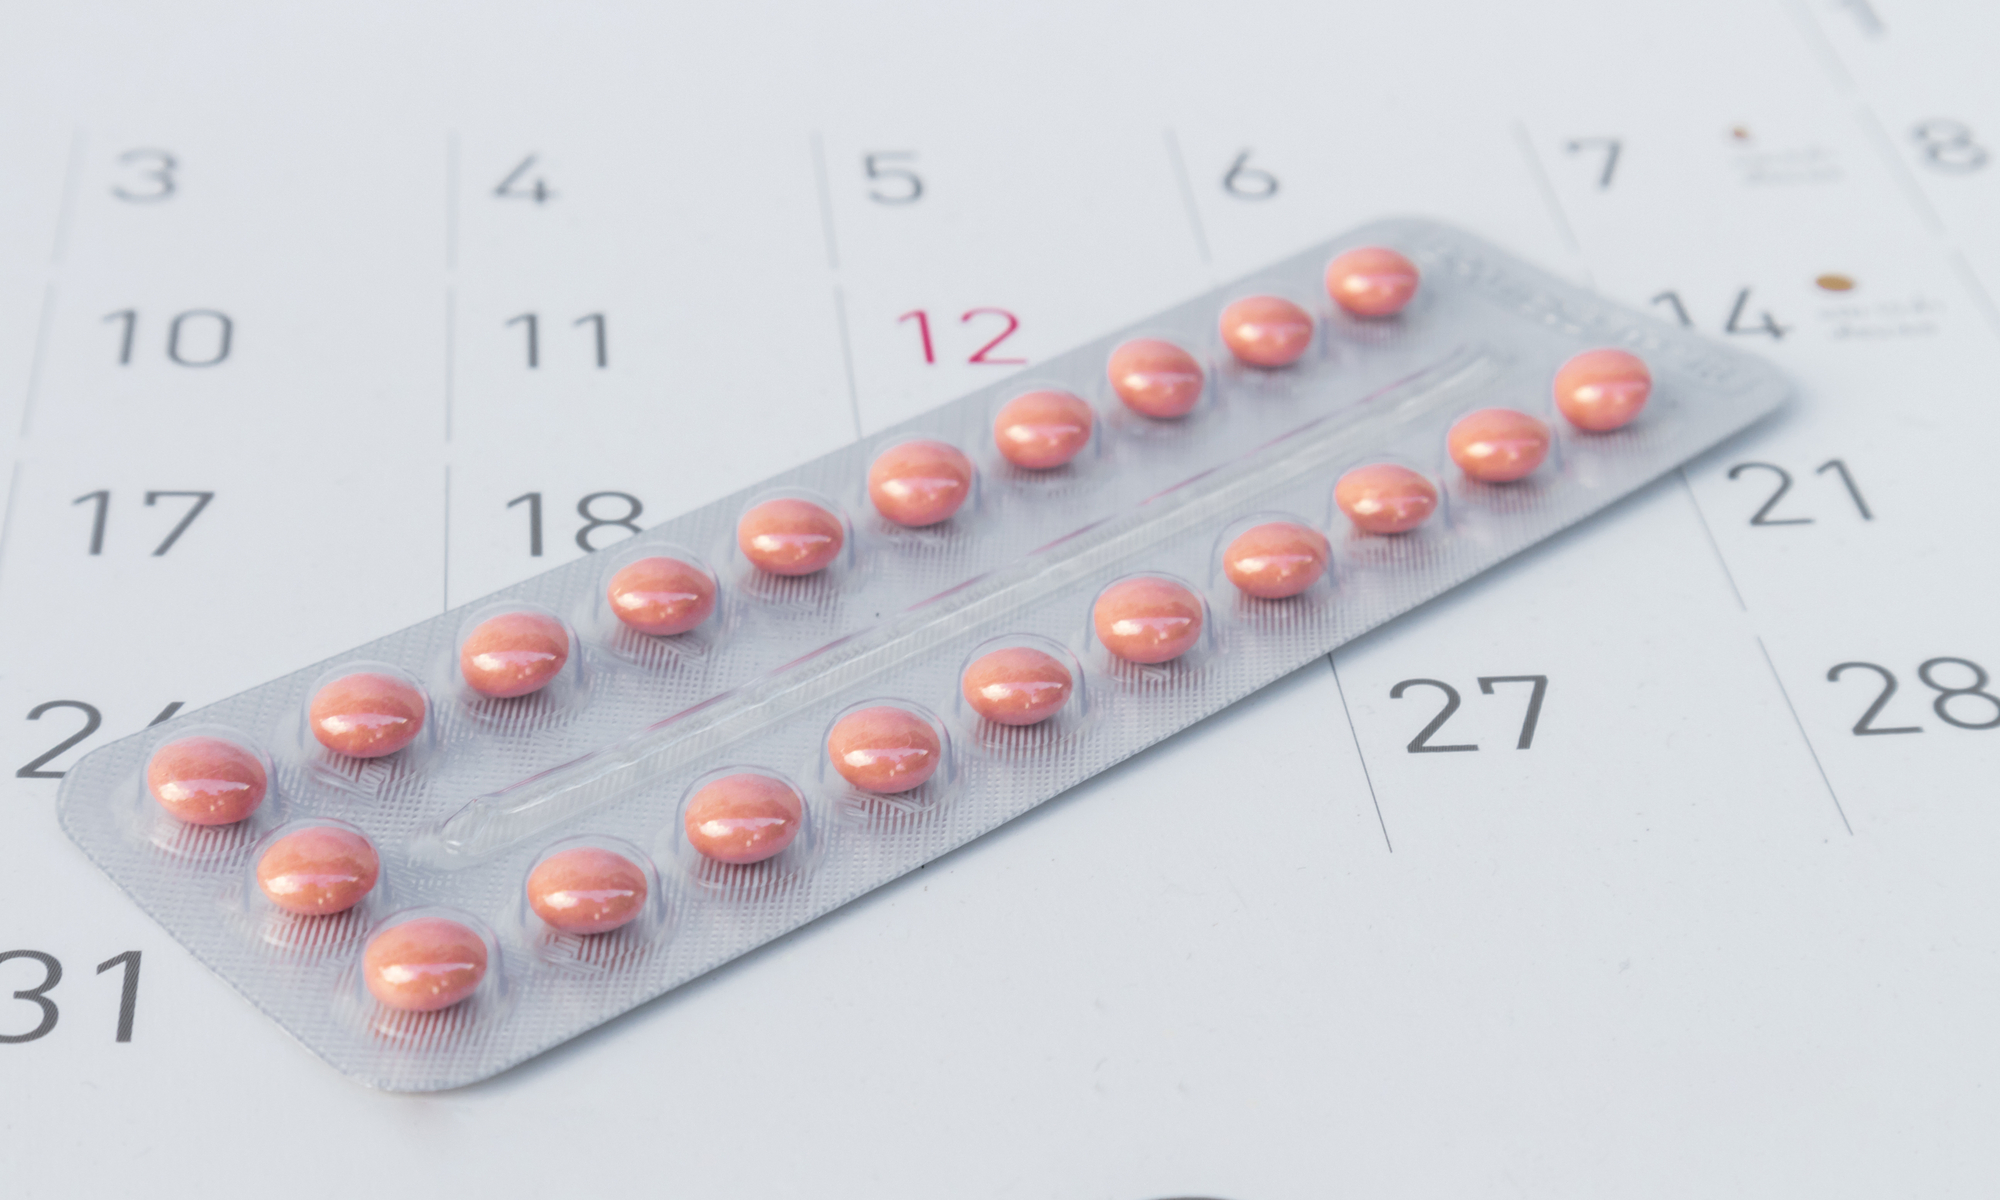 kontraceptivna pilula, foto: Depositphotos/mraoraor